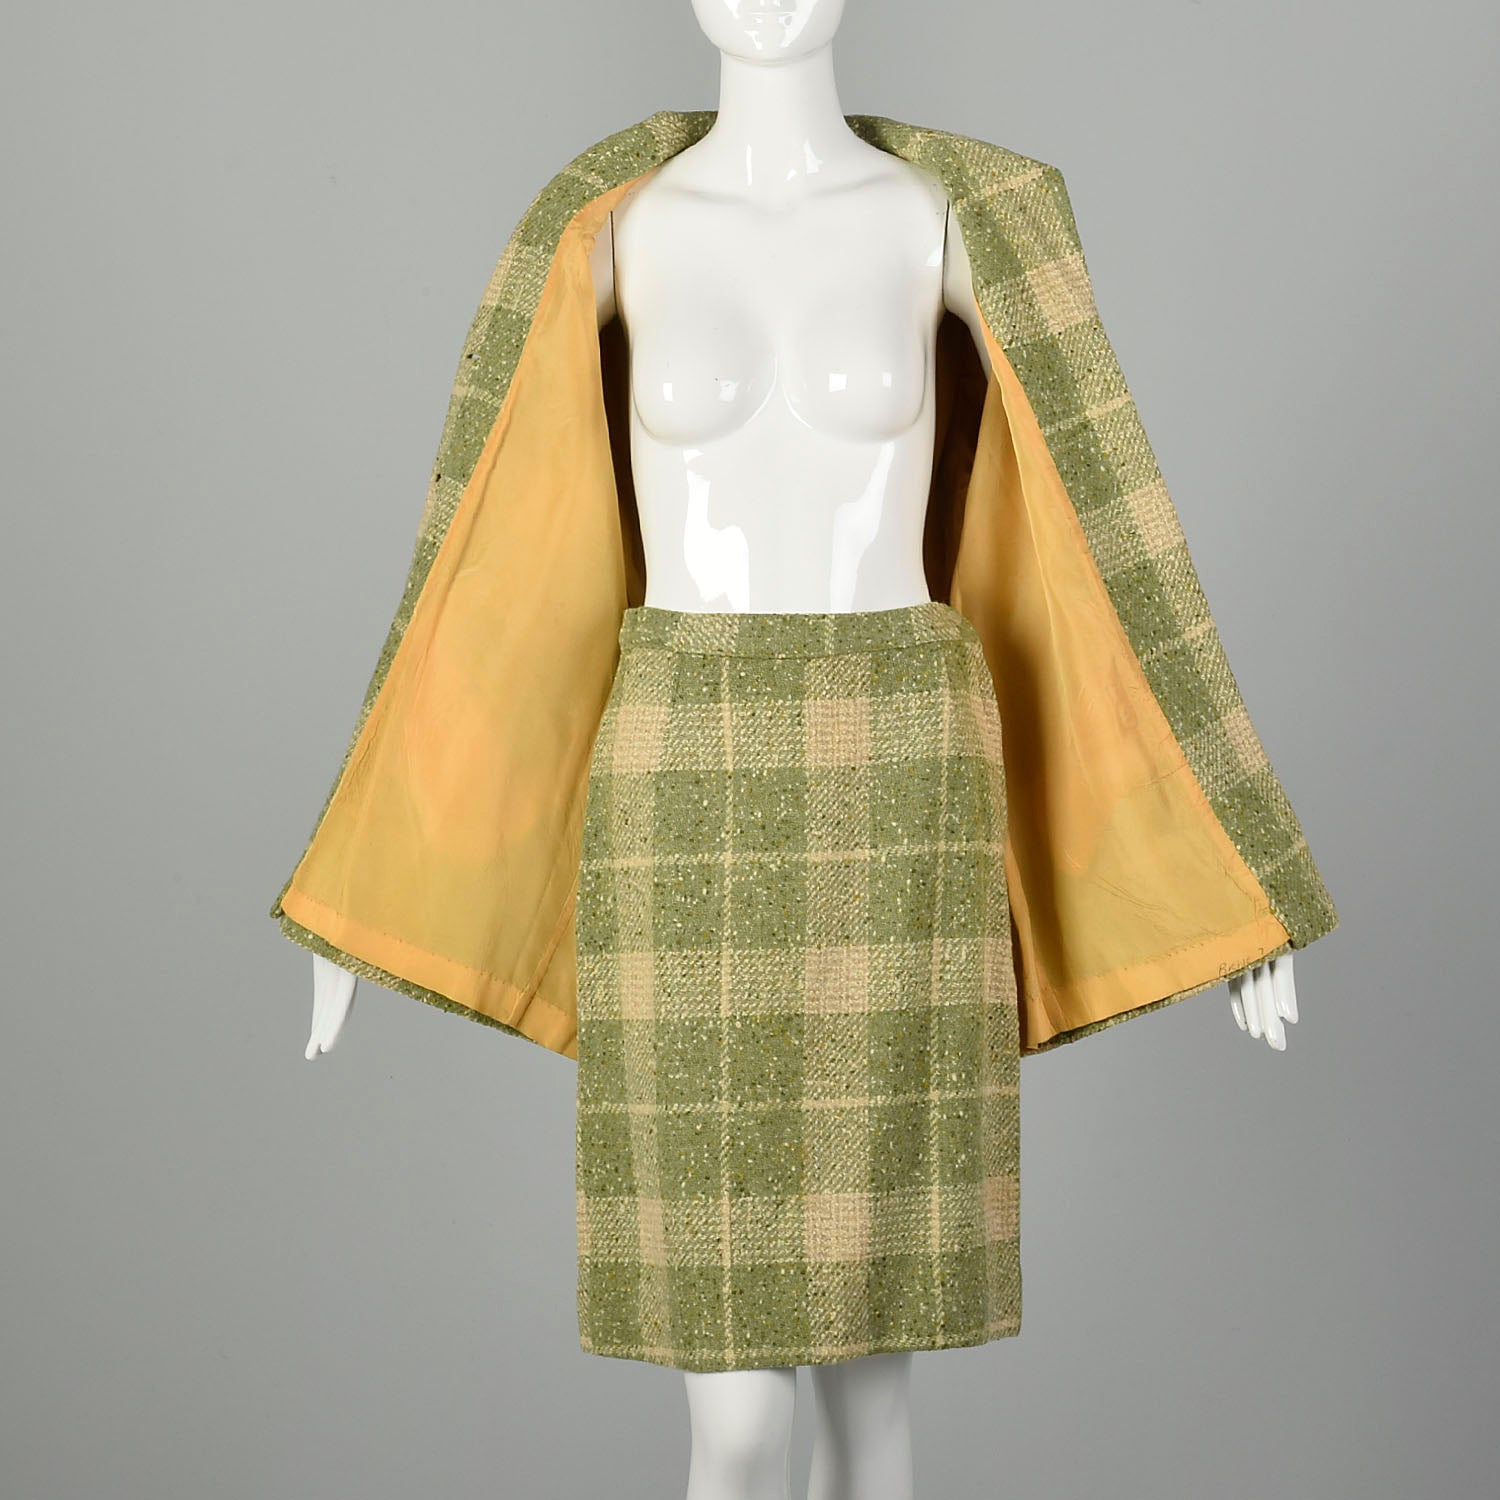 Small 1960s Two Piece Set Green Beige Plaid Fleck Tweed  Separates Ensemble Skirt Jacket